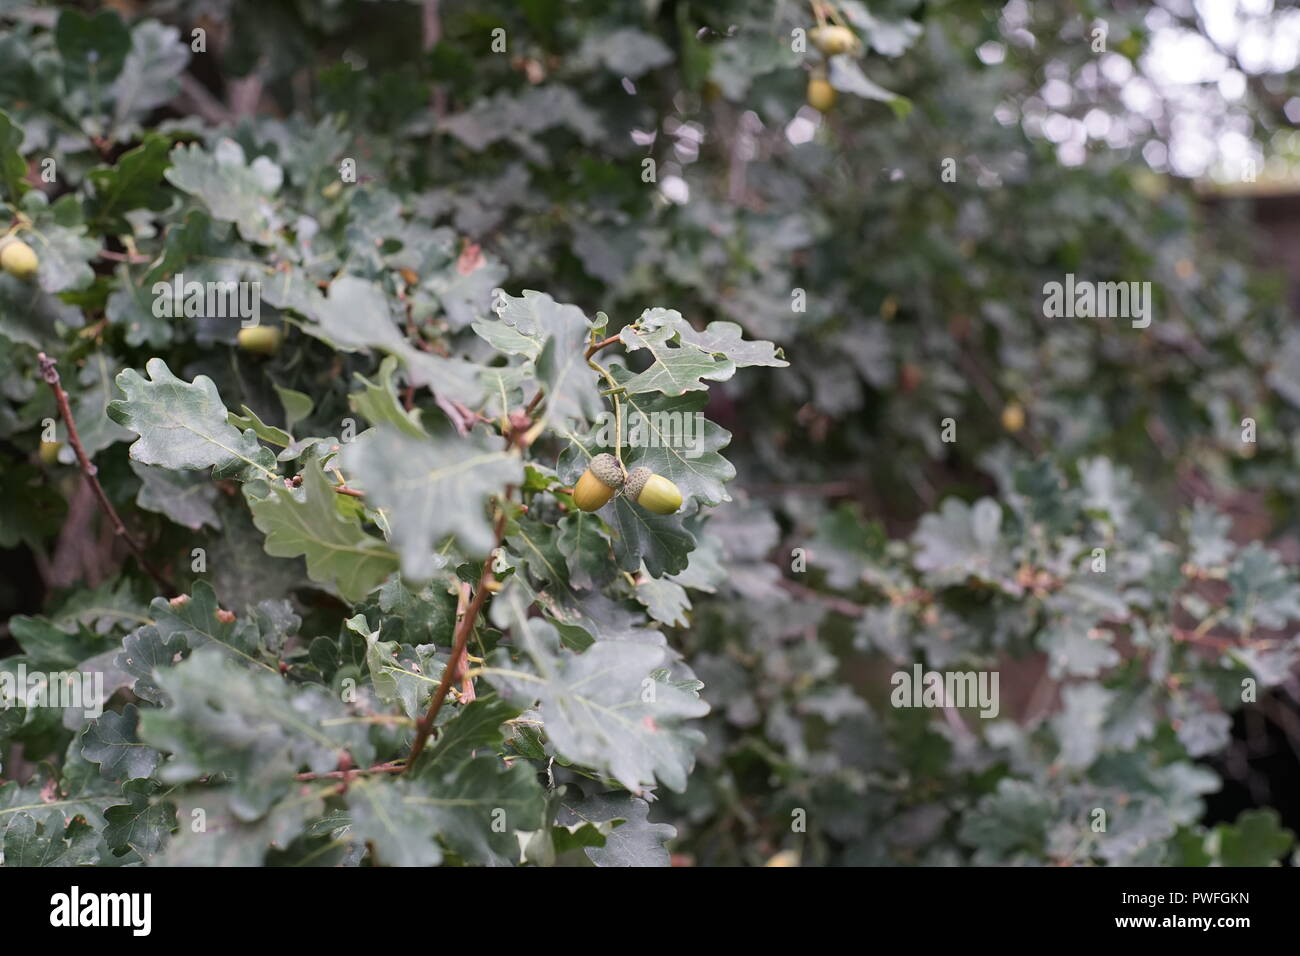 Acorns fruits. Closeup acorns fruits in the oak nut tree against blurred green background. Stock Photo